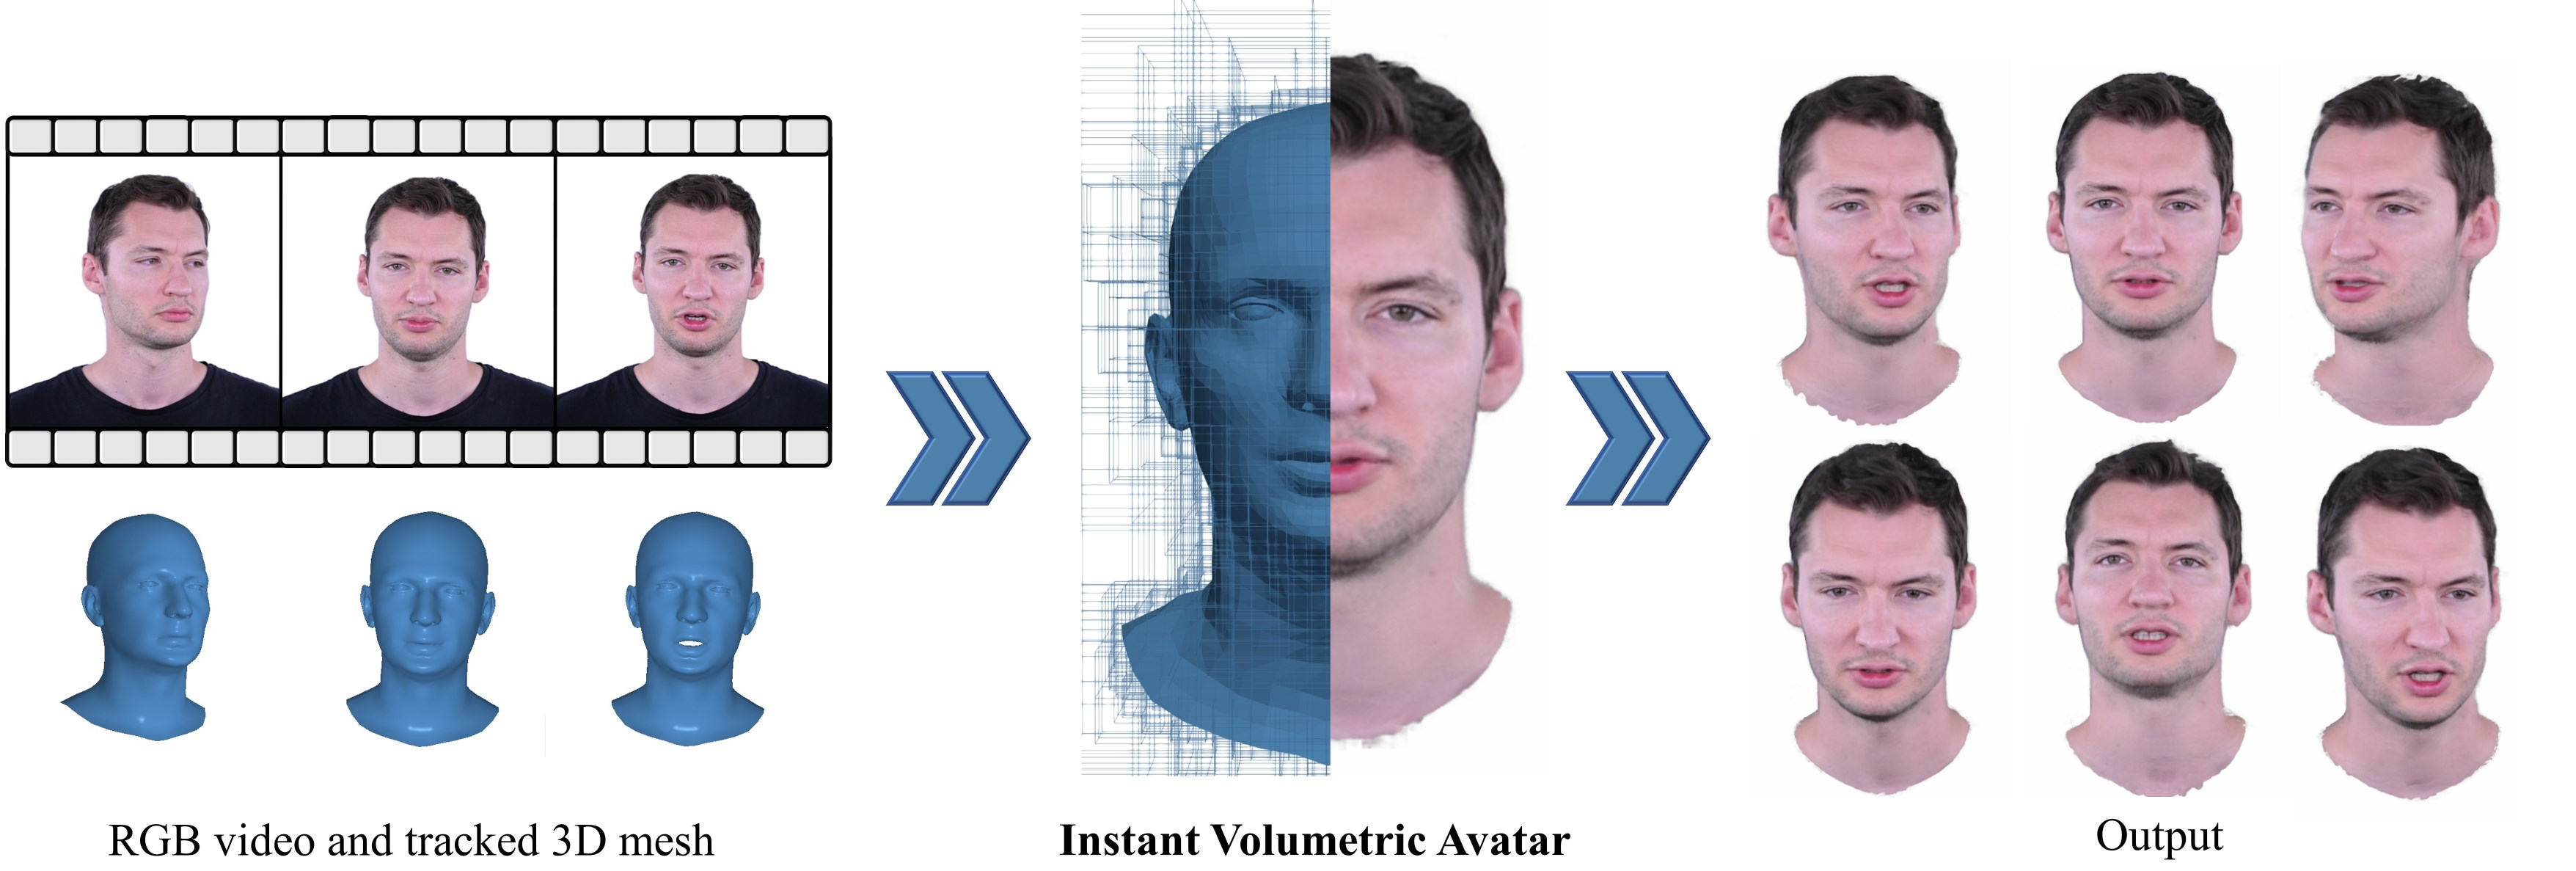 Instant Volumetric Head Avatars